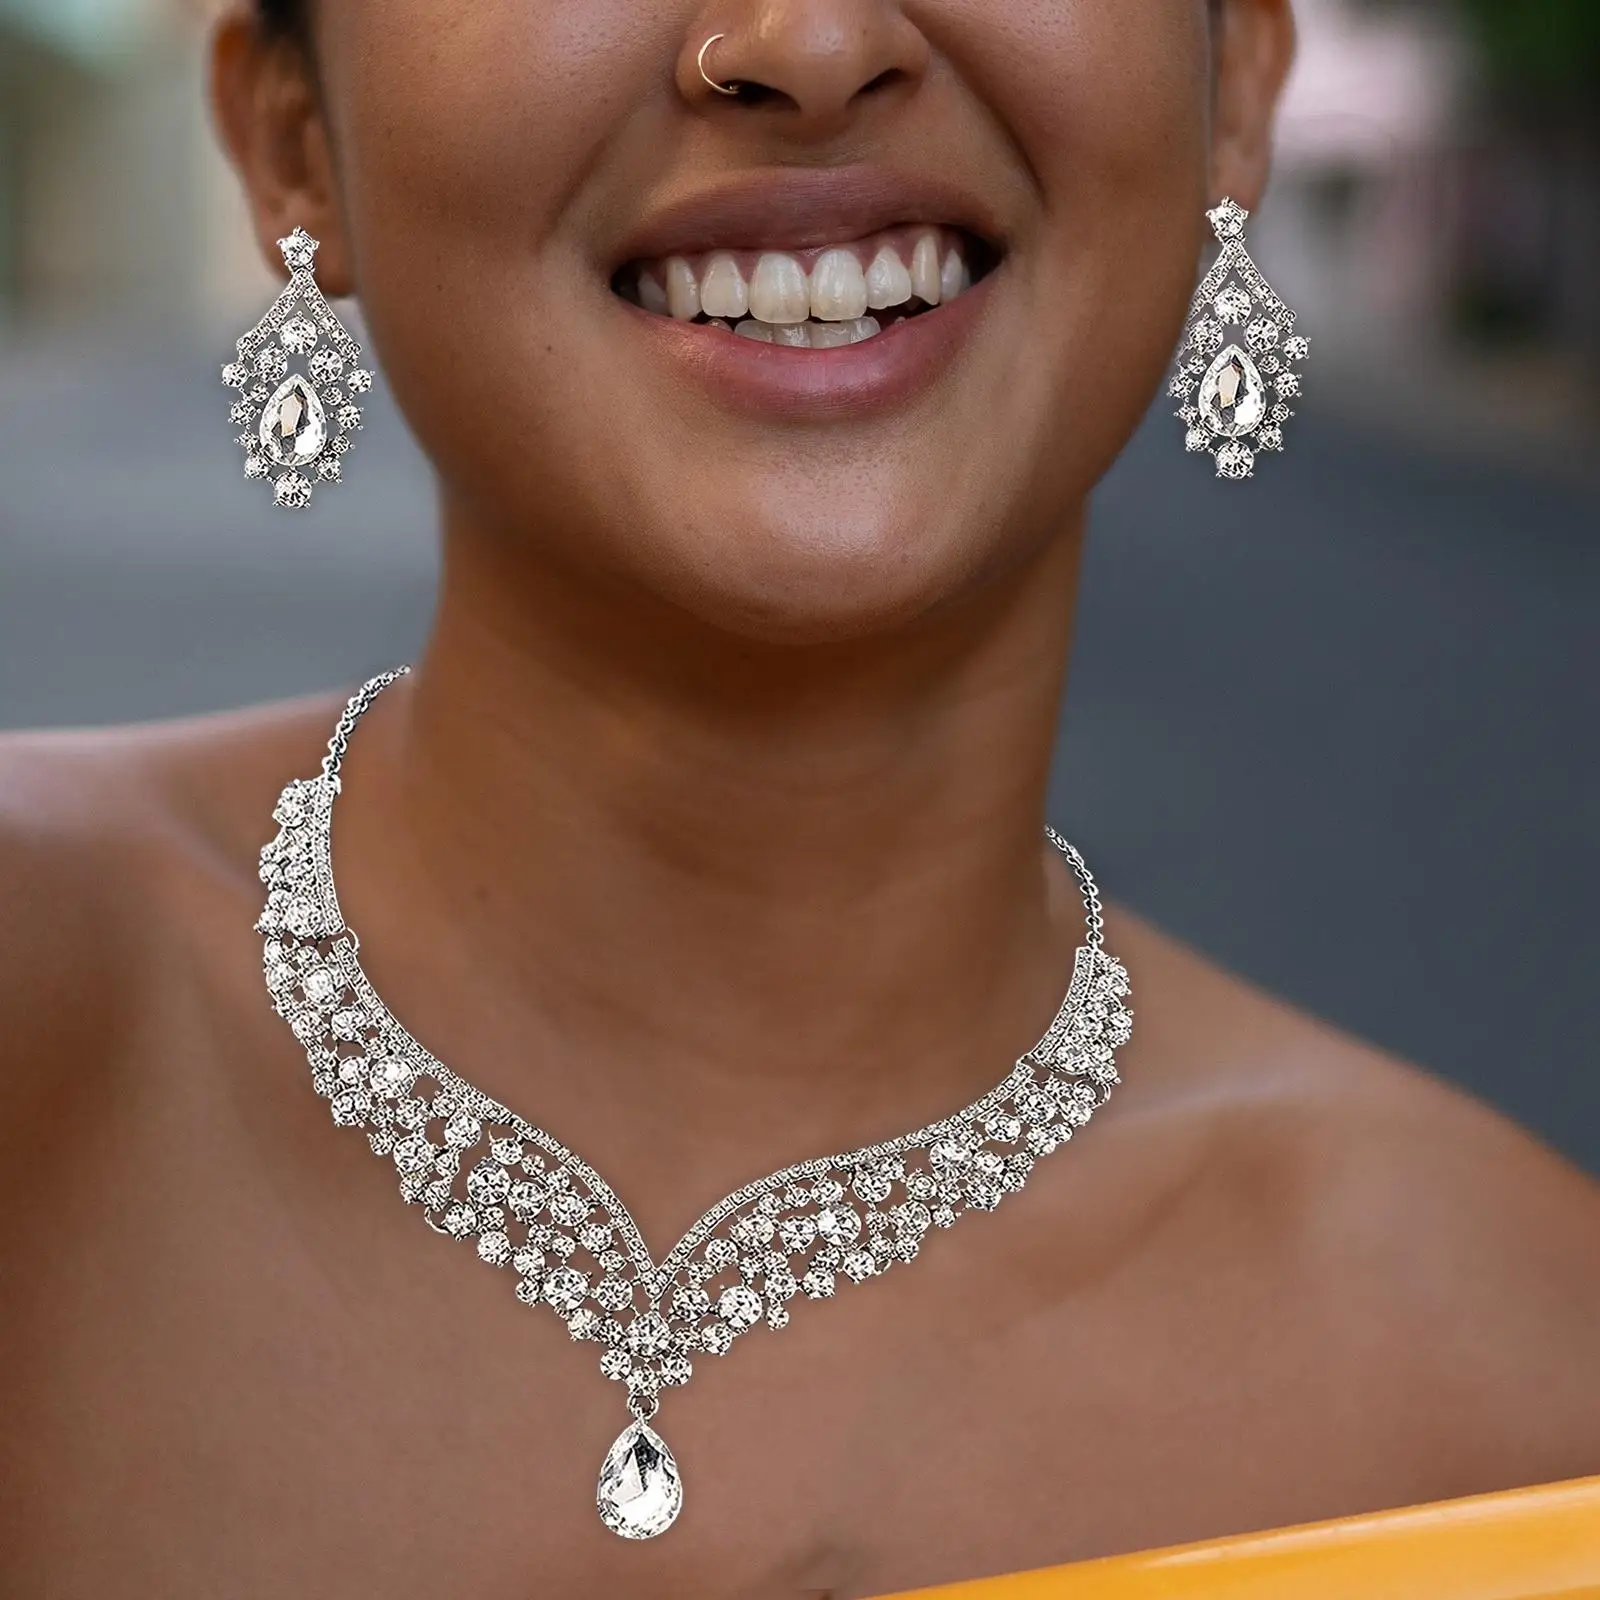 Elegant Crystal Bridal Jewelry Set Rhinestone Necklace Earrings for Party Wedding Bridal Bridesmaid Girls